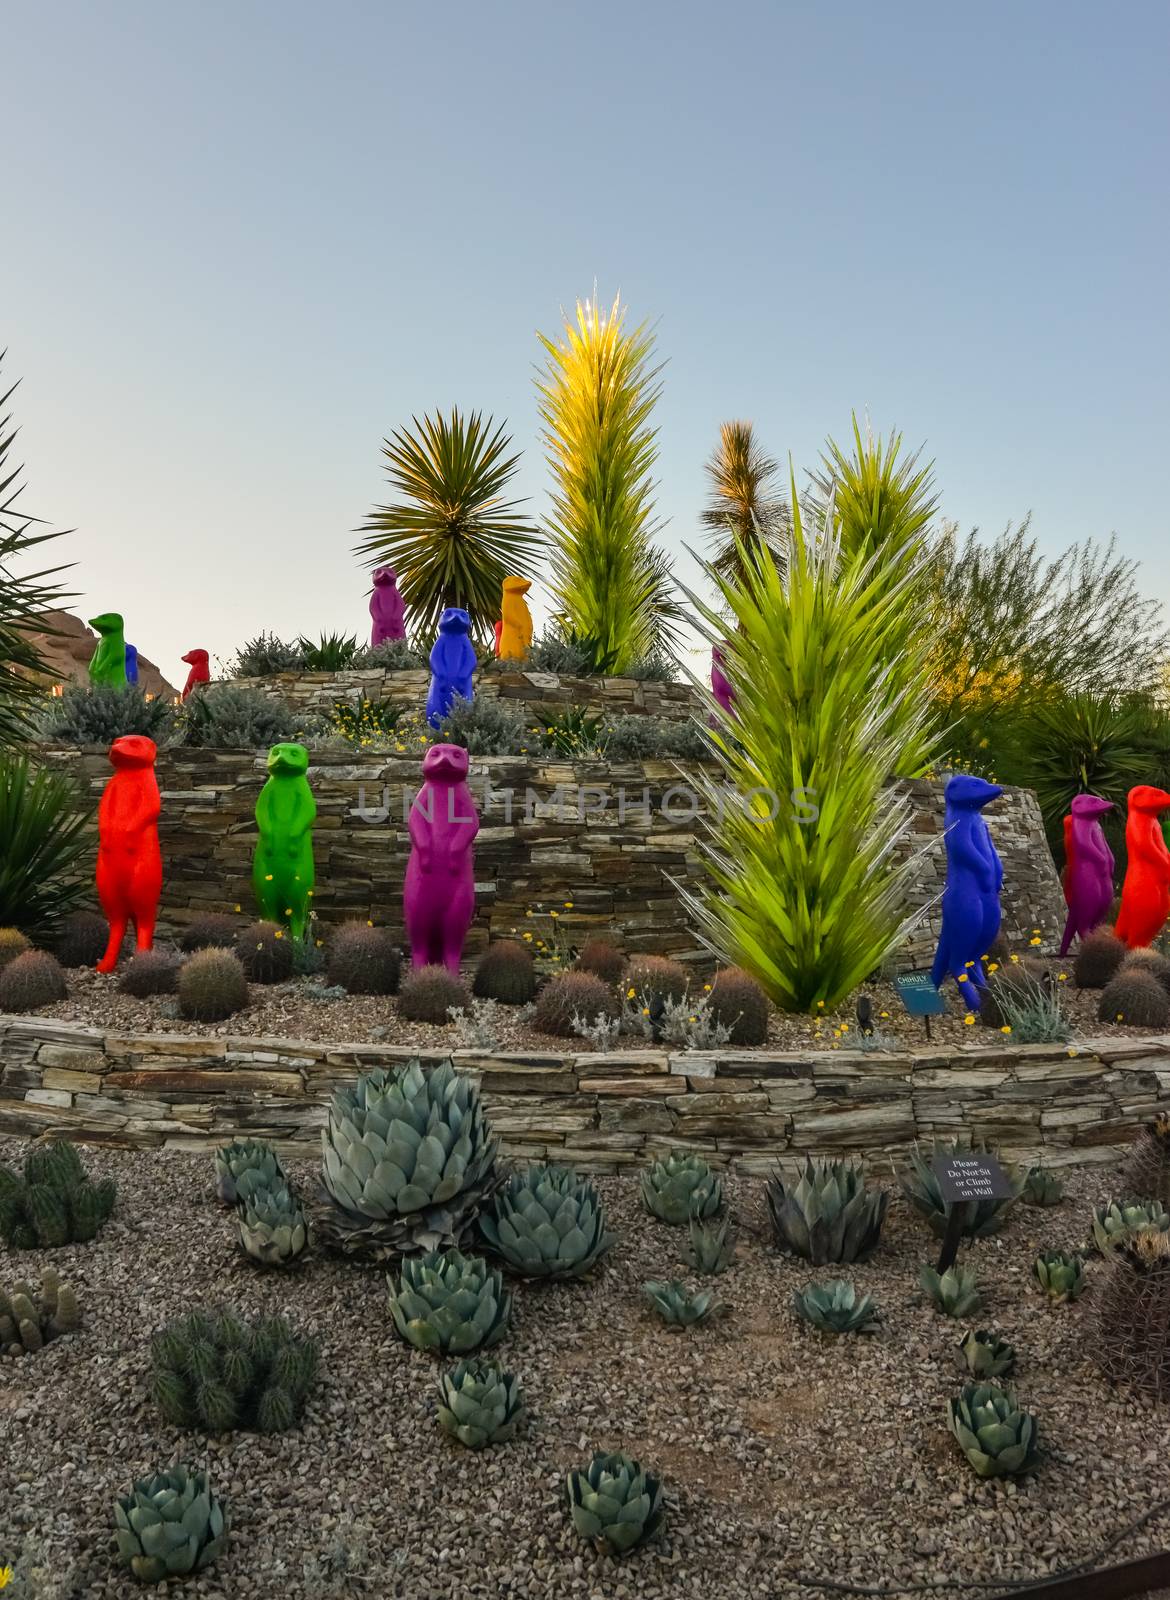 USA, PHENIX, ARIZONA- NOVEMBER 17, 2019: multi-colored plastic animal figures among cacti of different species in the botanical garden of the Phoenix, Arizona